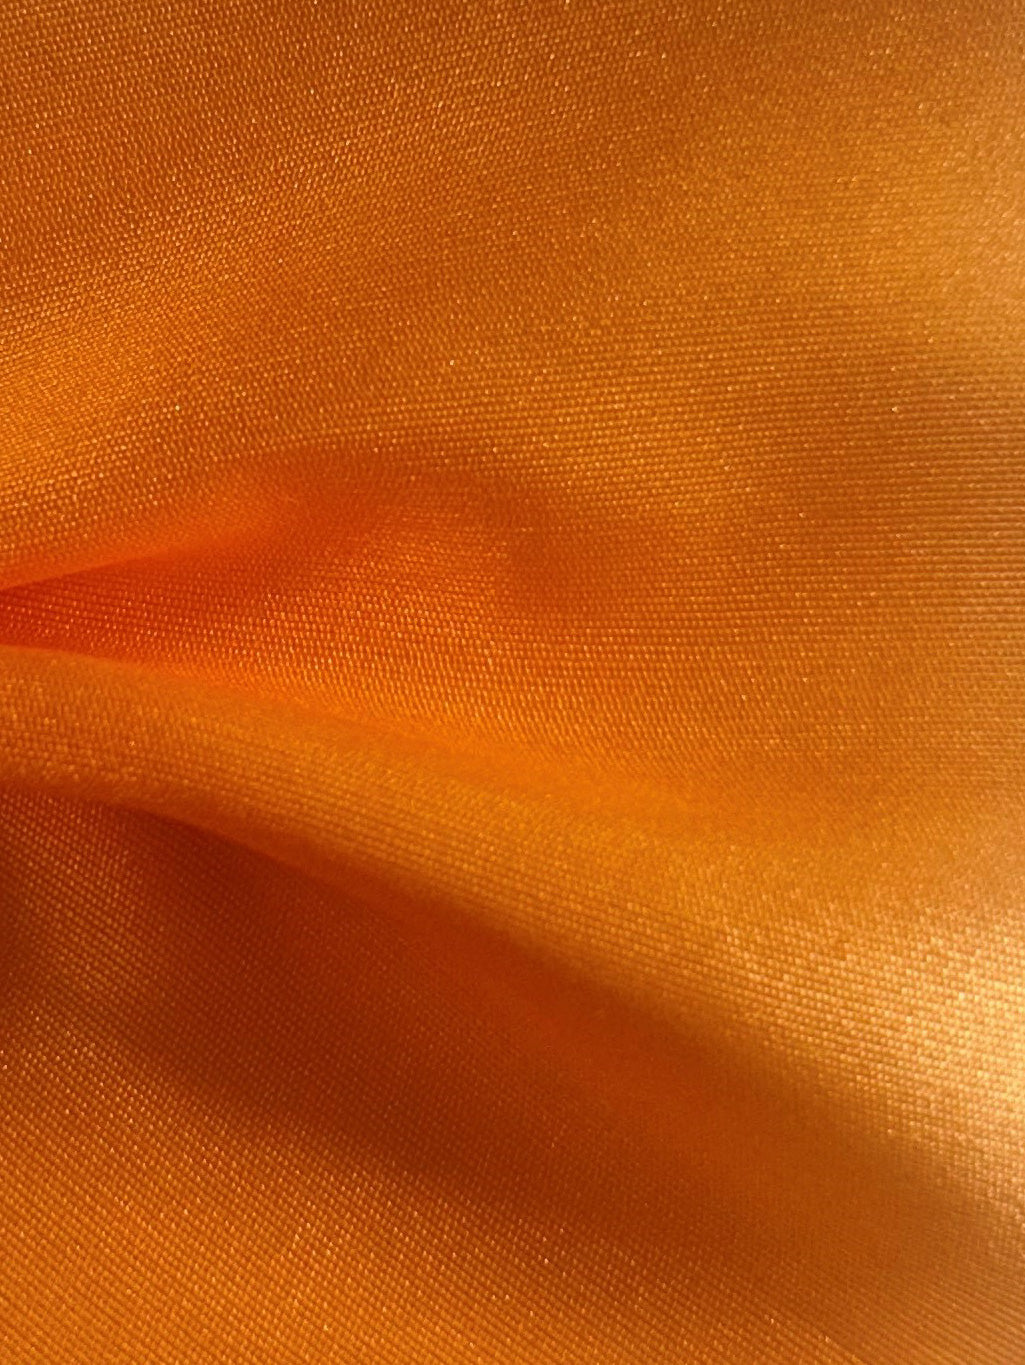 Orange Polyester Taffeta - Waltz